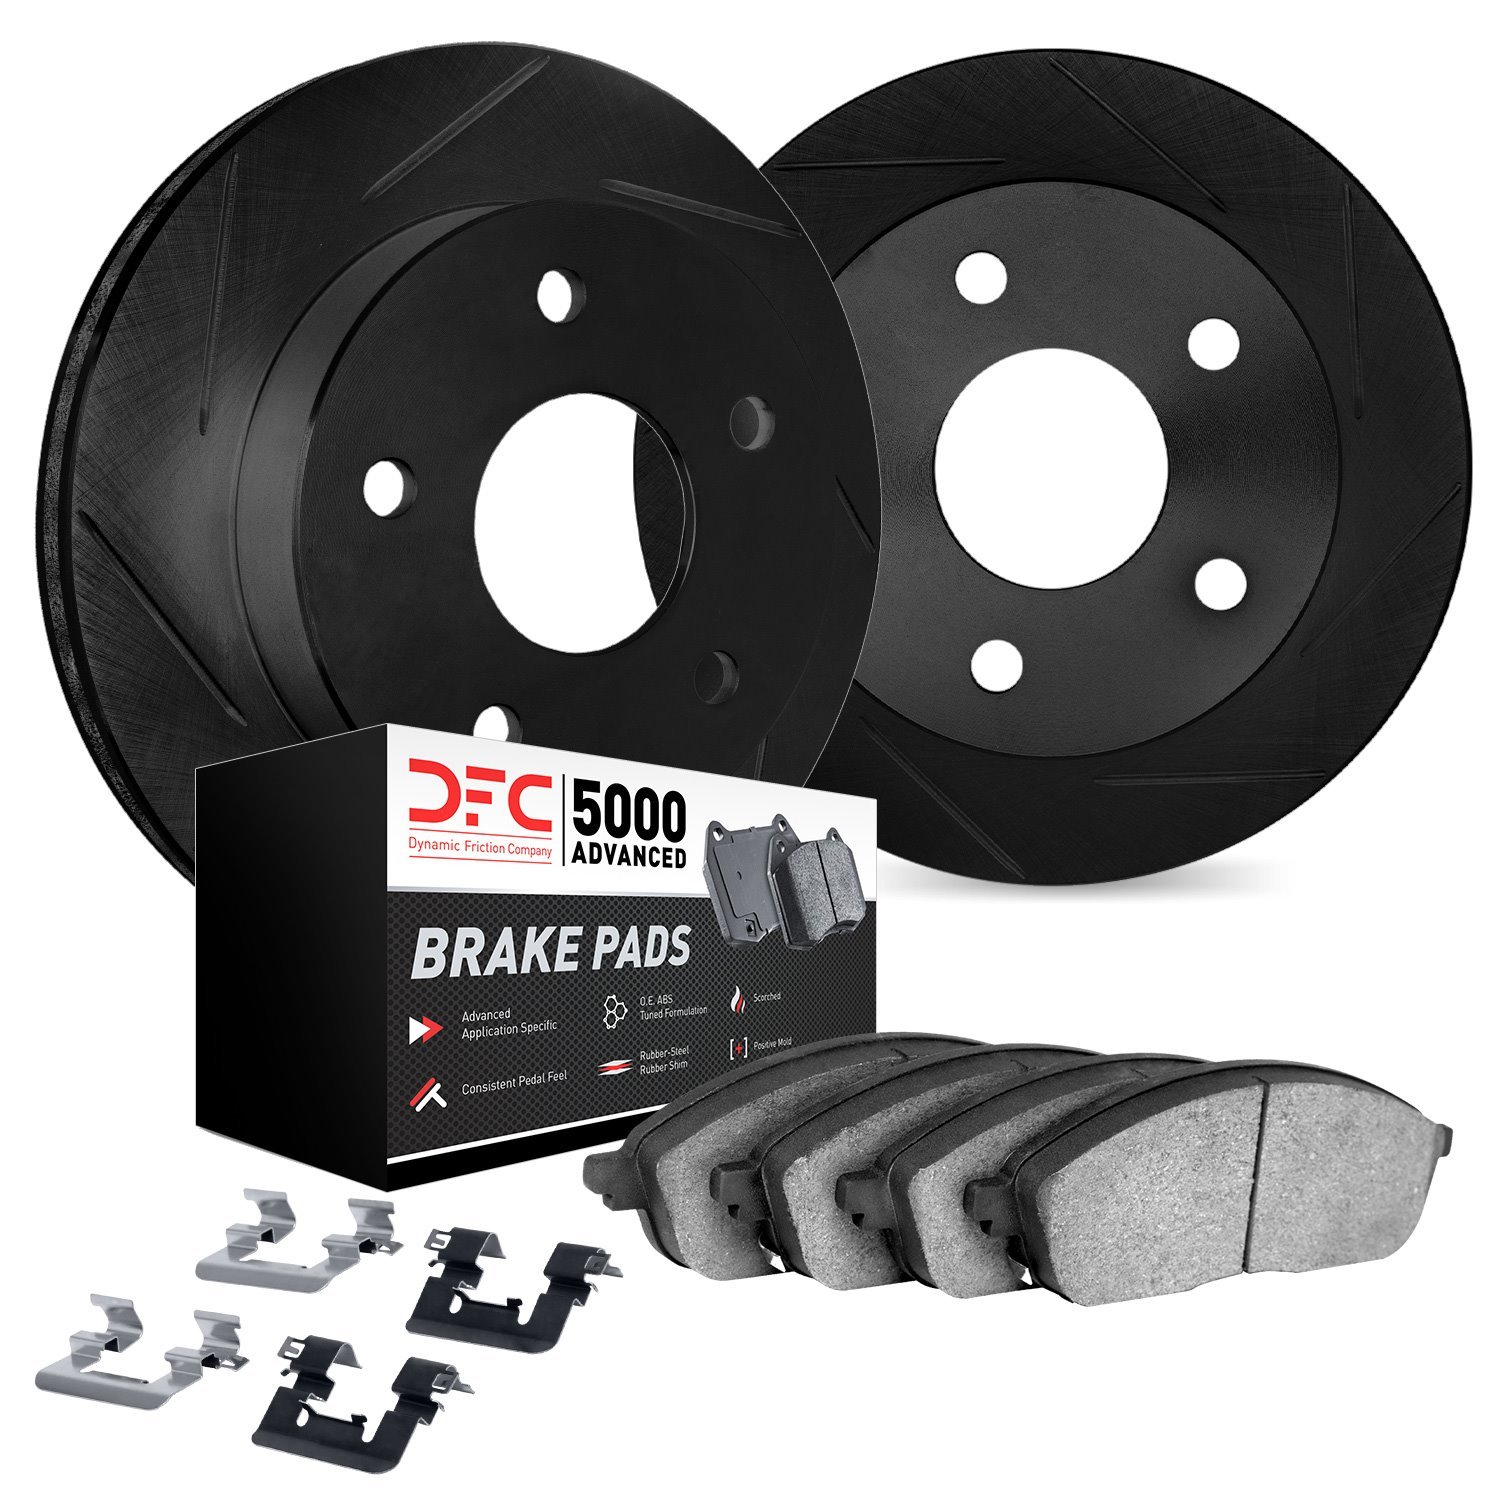 3512-54188 Slotted Brake Rotors w/5000 Advanced Brake Pads Kit & Hardware [Black], 2007-2015 Ford/Lincoln/Mercury/Mazda, Positio